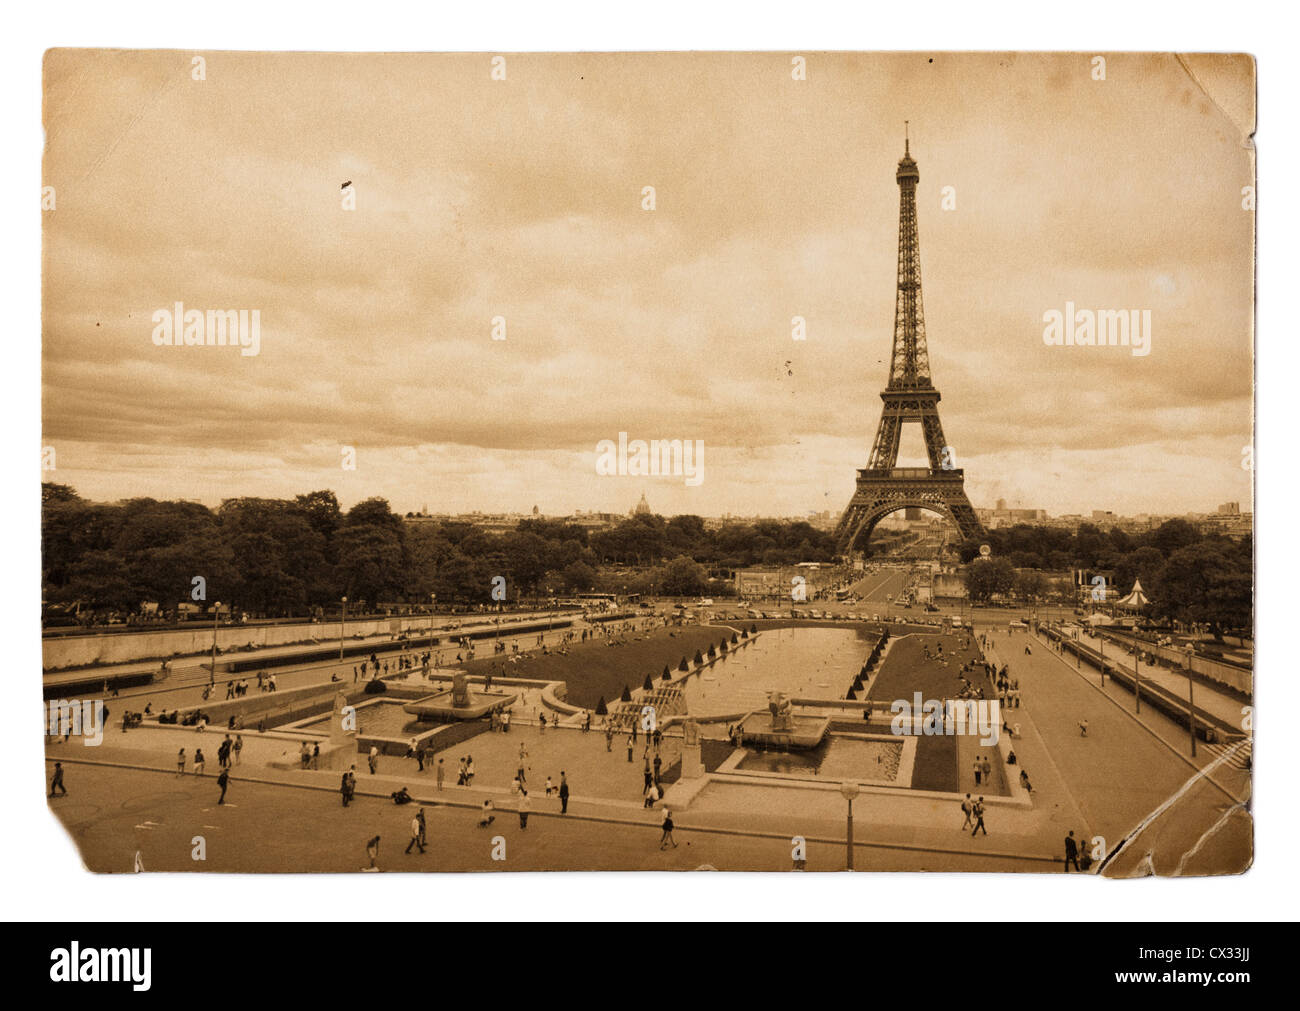 Vintage nei toni seppia cartolina della torre Eiffel a Parigi Foto Stock